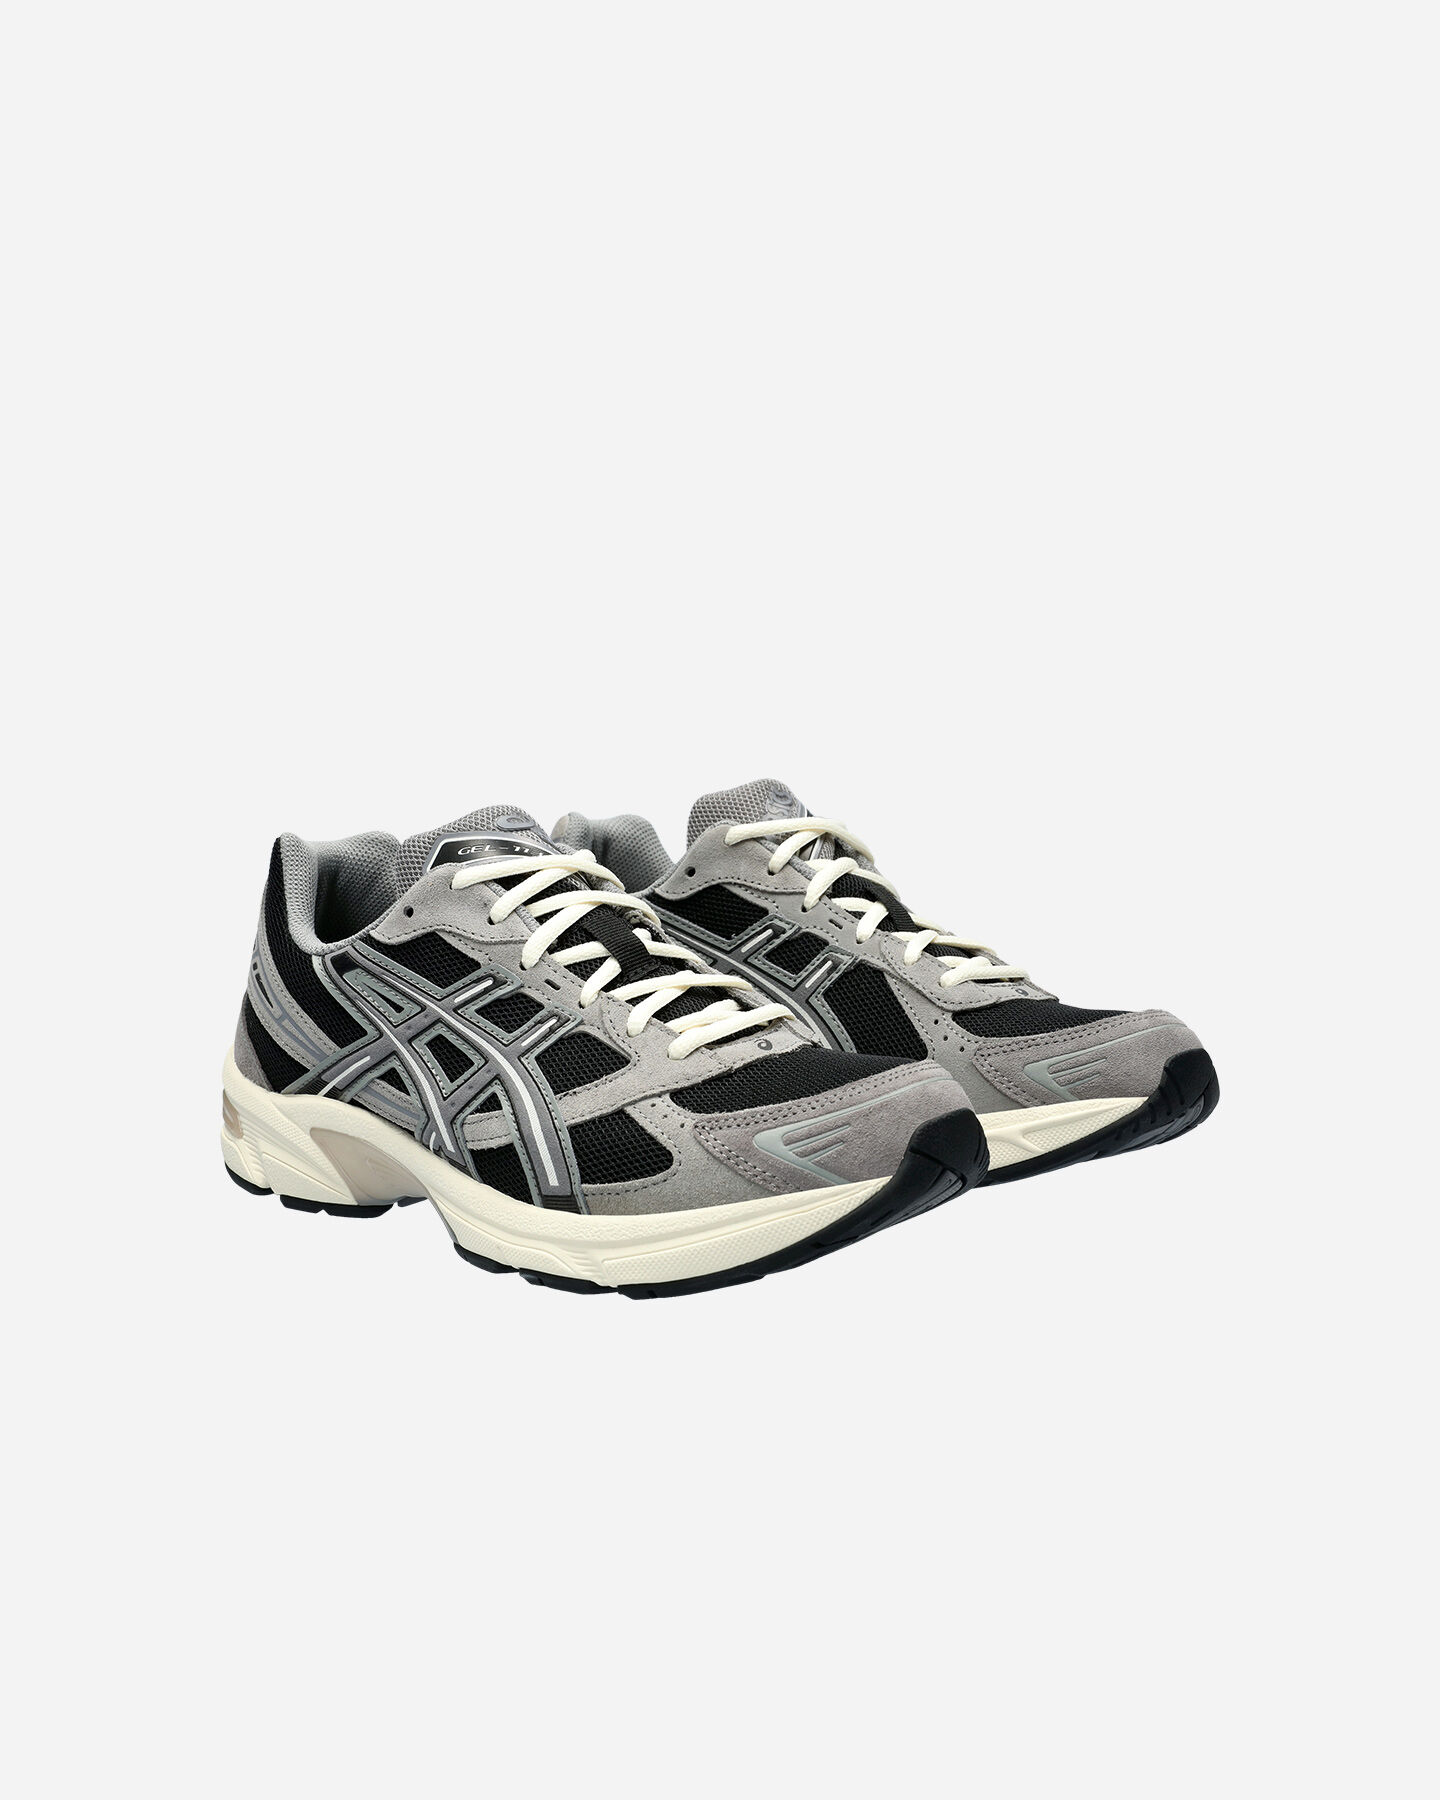  Scarpe sneakers ASICS GEL-1130 M S5643098|004|7 scatto 1